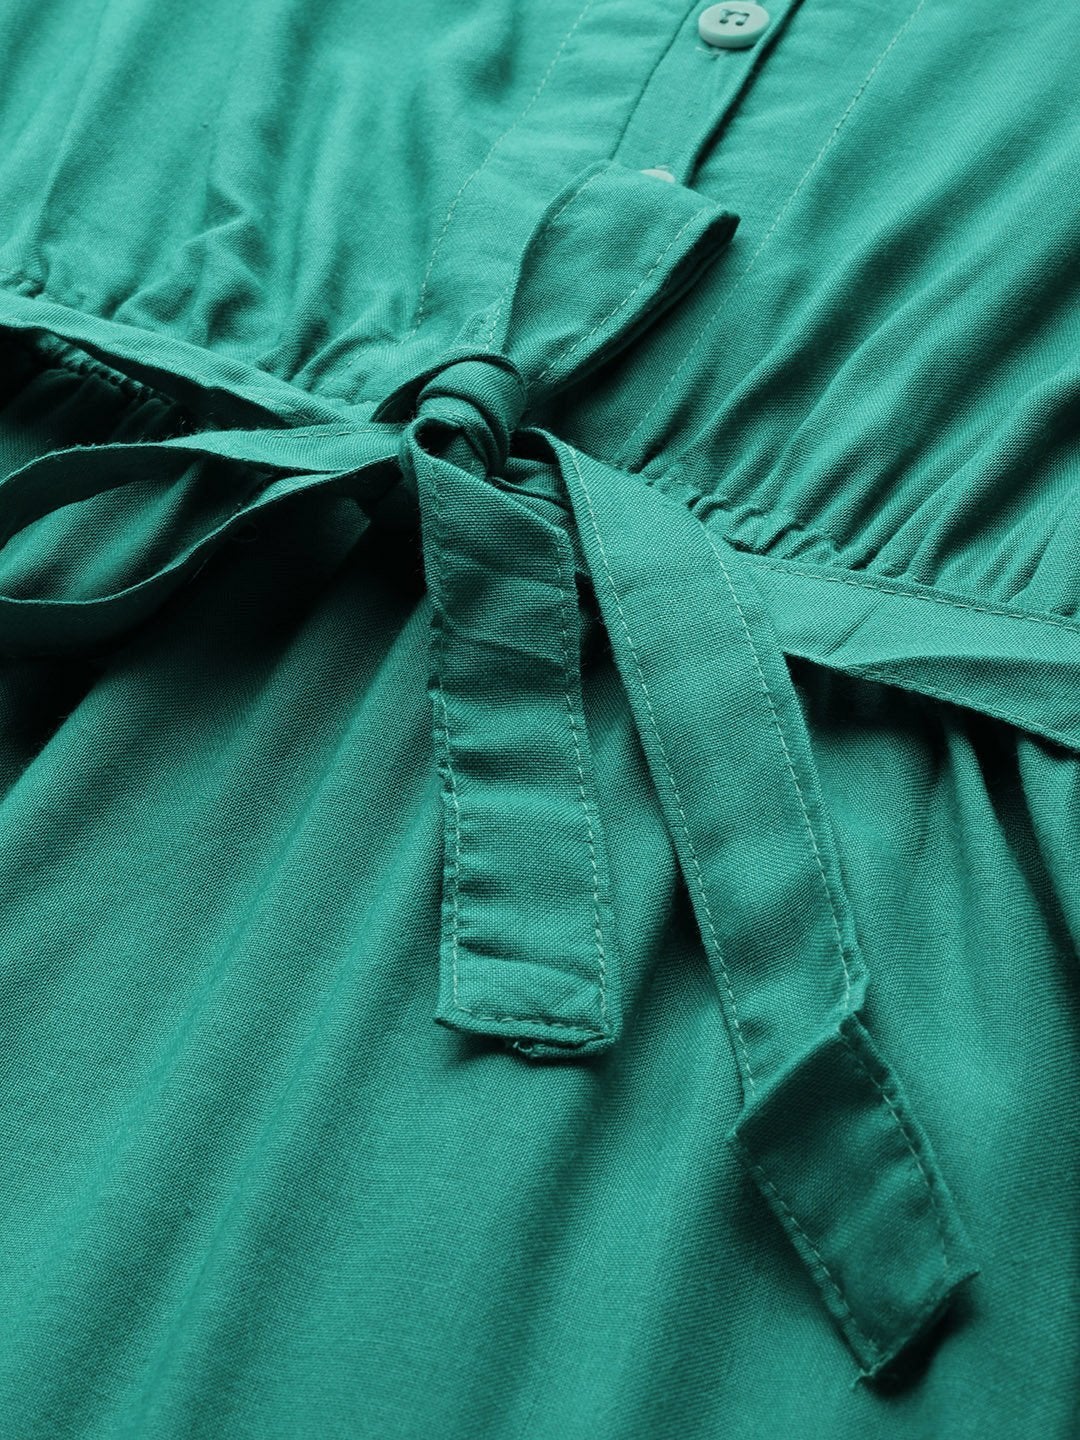 Women's Green Dress With Belt - InWeave